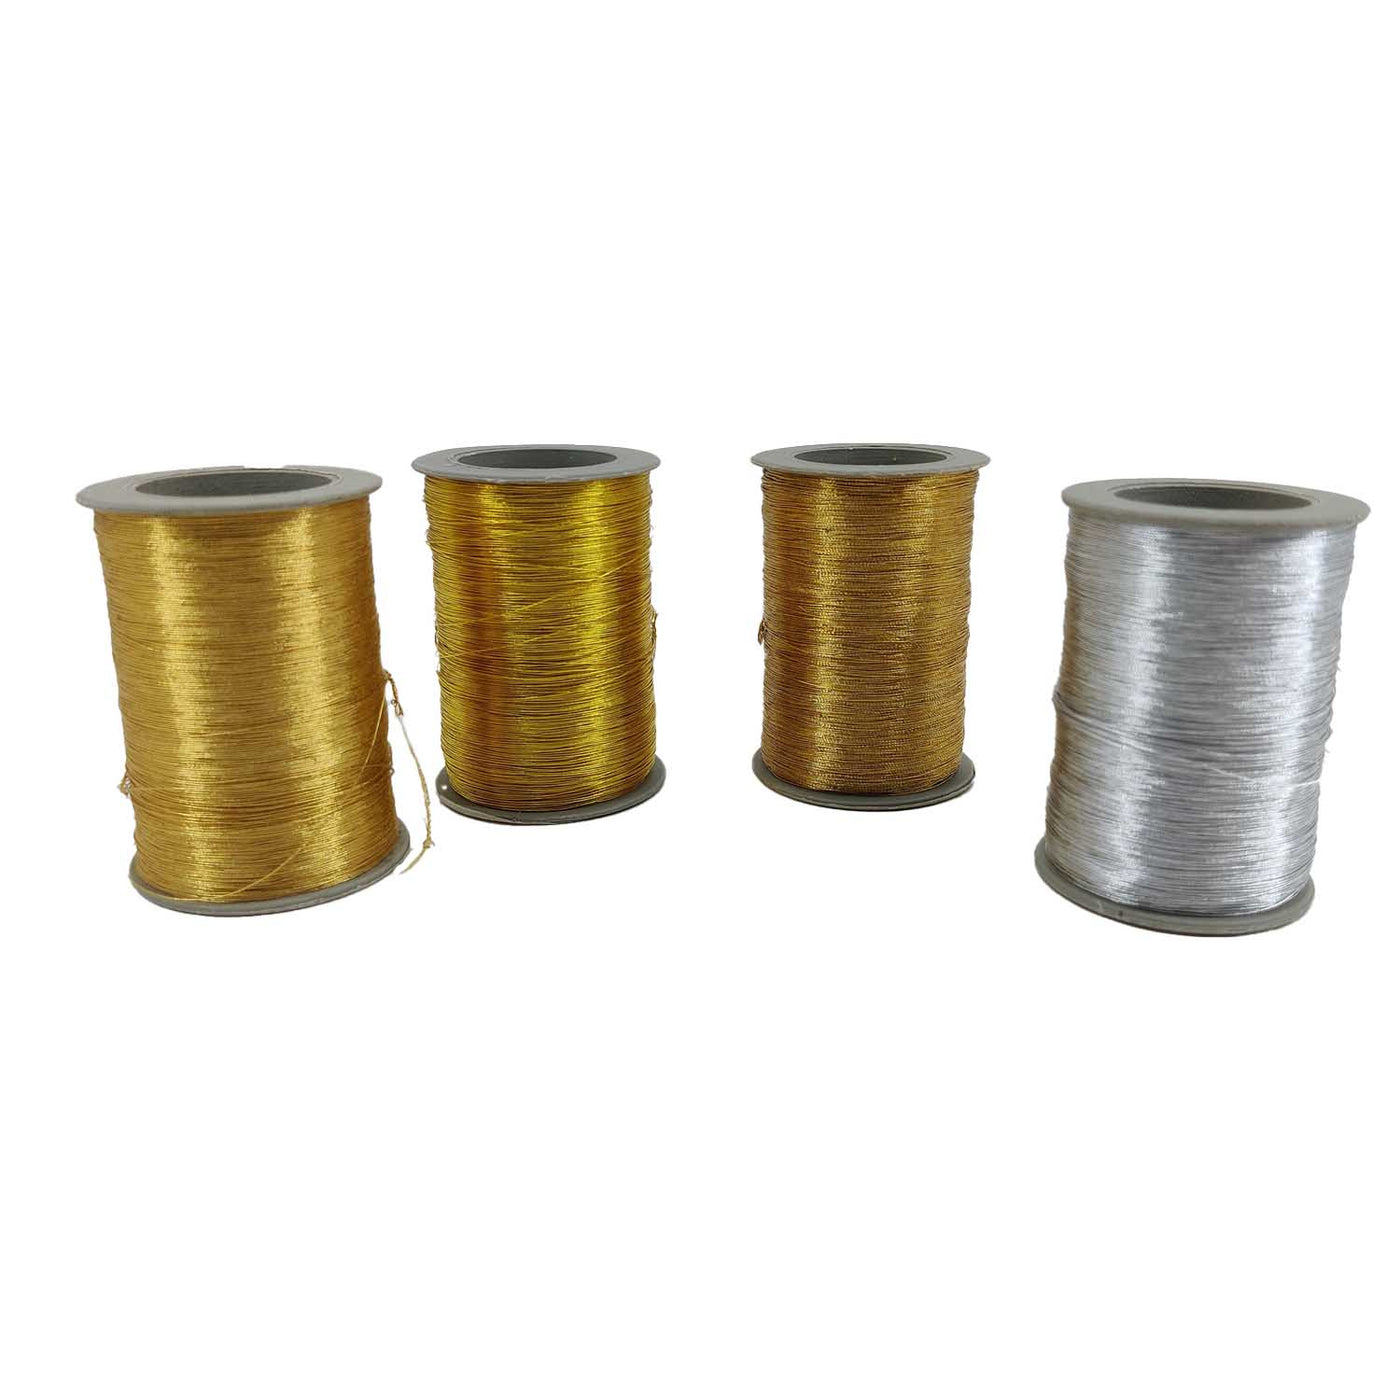 Multicolor Zari Metallic Threads